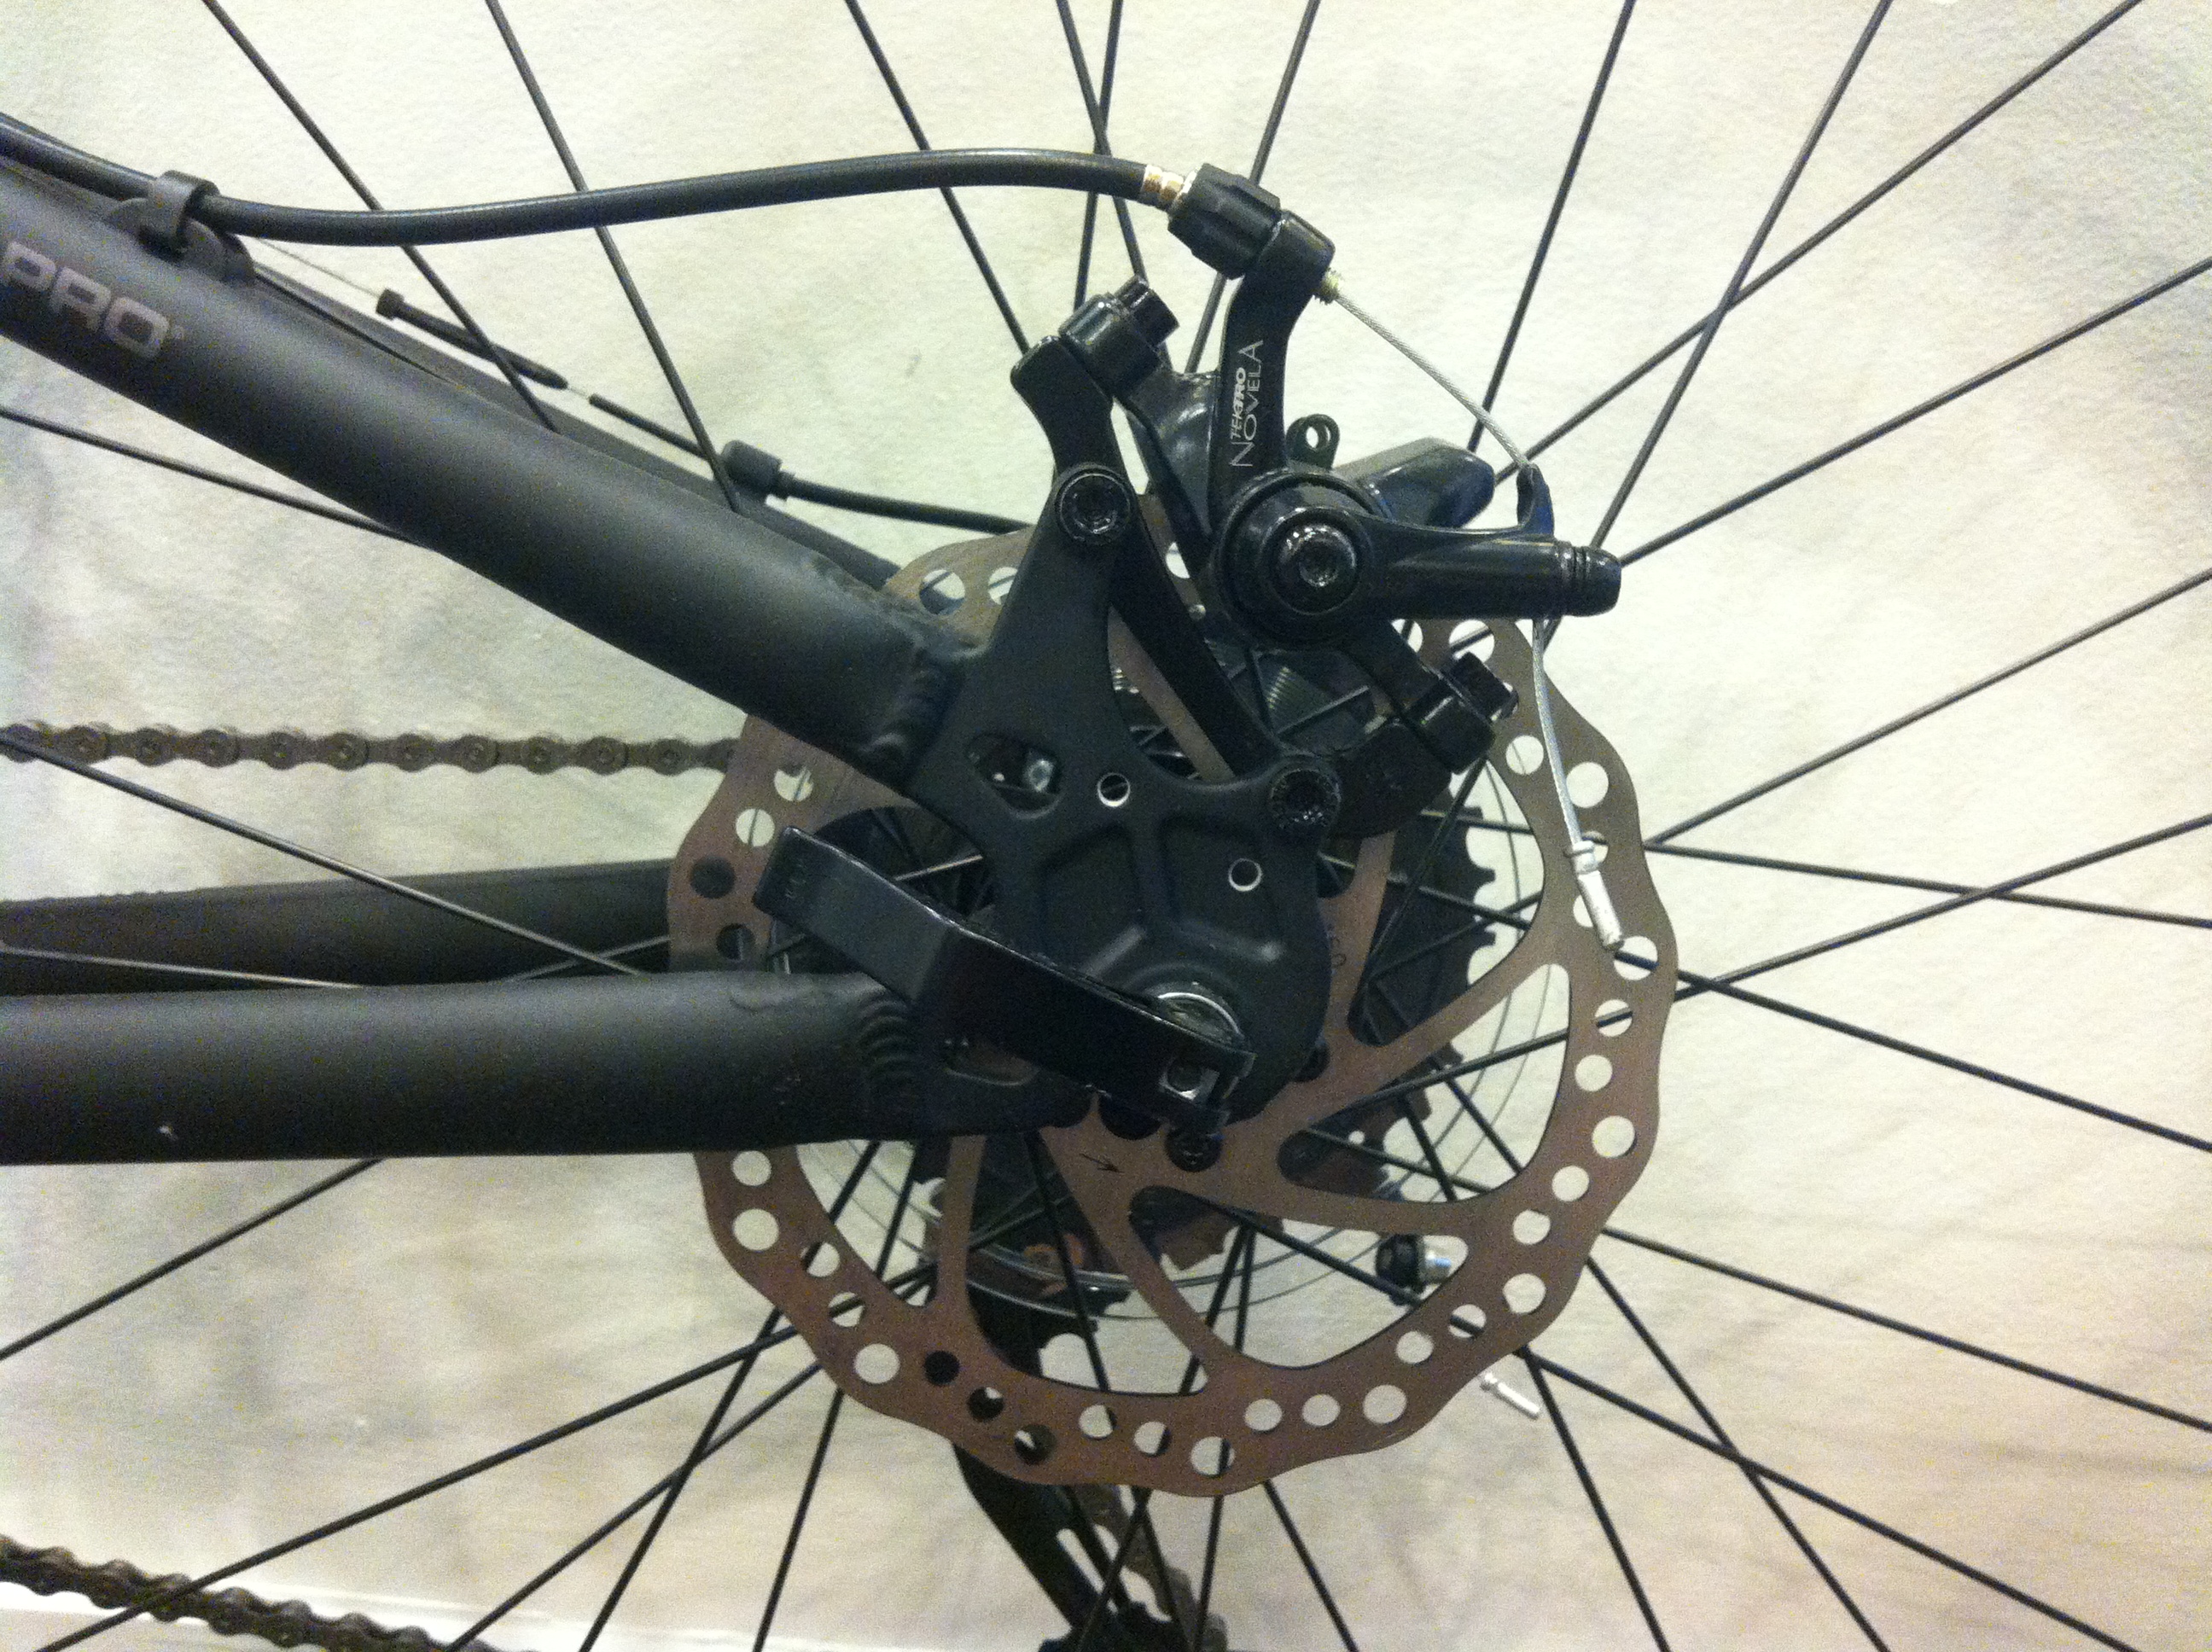 buy disc brake for bicycle